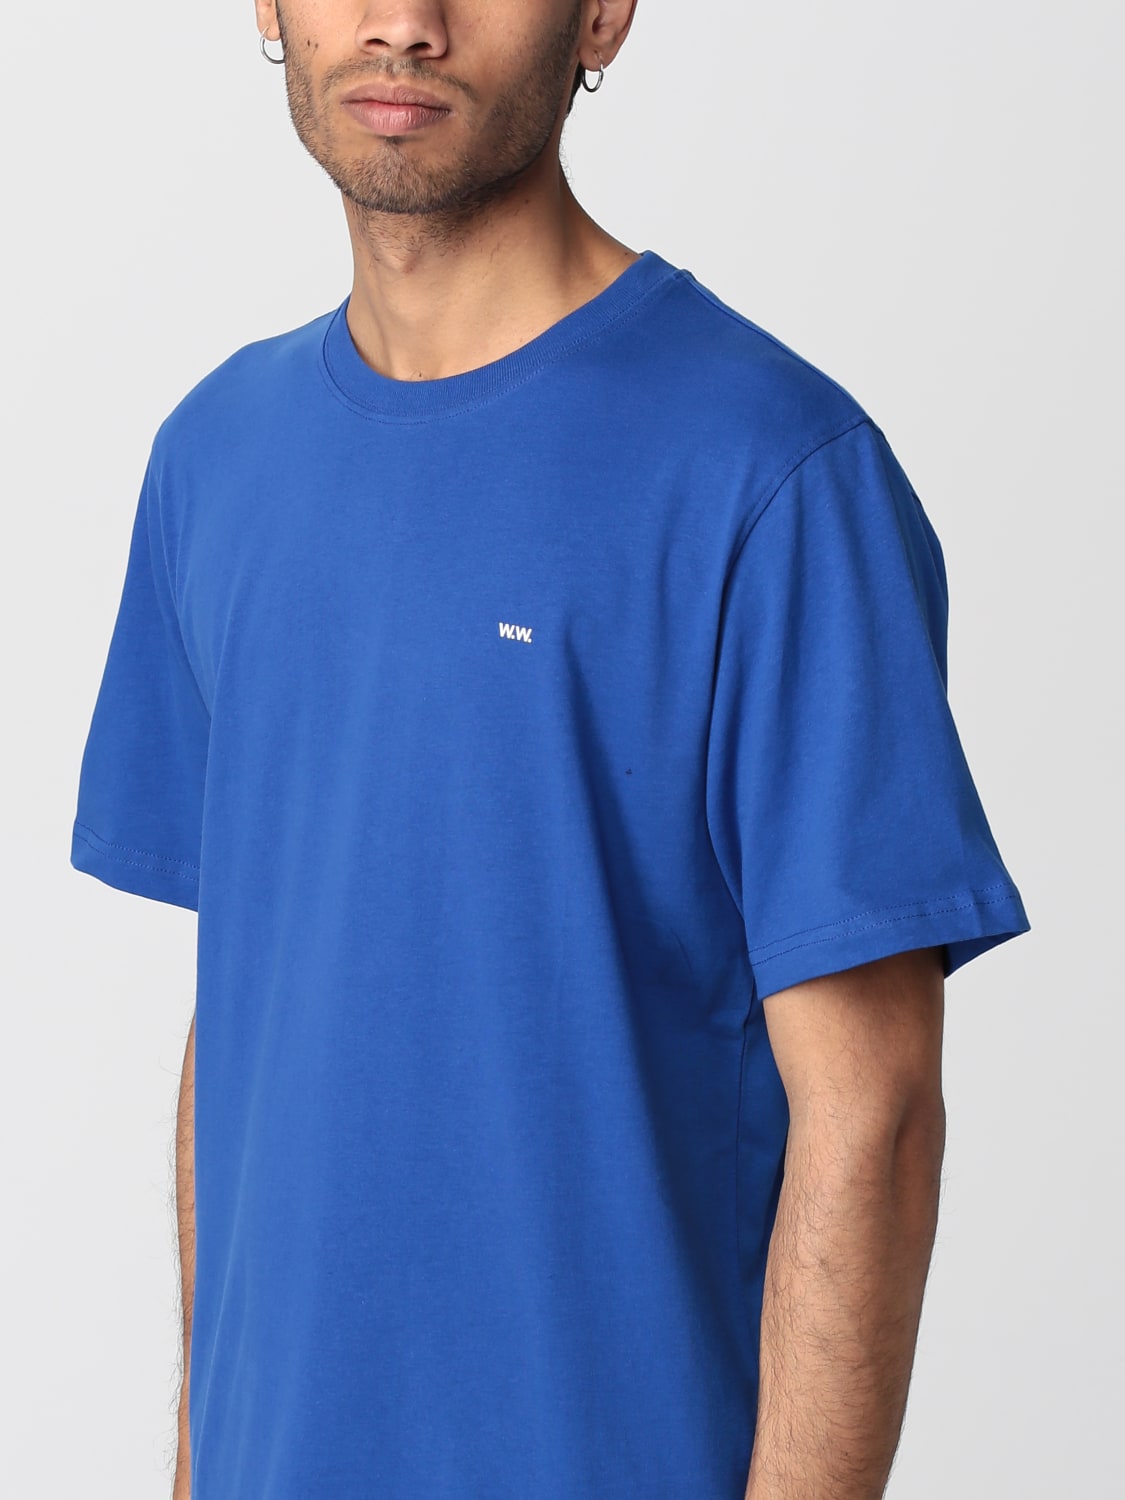 WOOD WOOD: t-shirt for man - Blue | Wood t-shirt 123157002491 online on